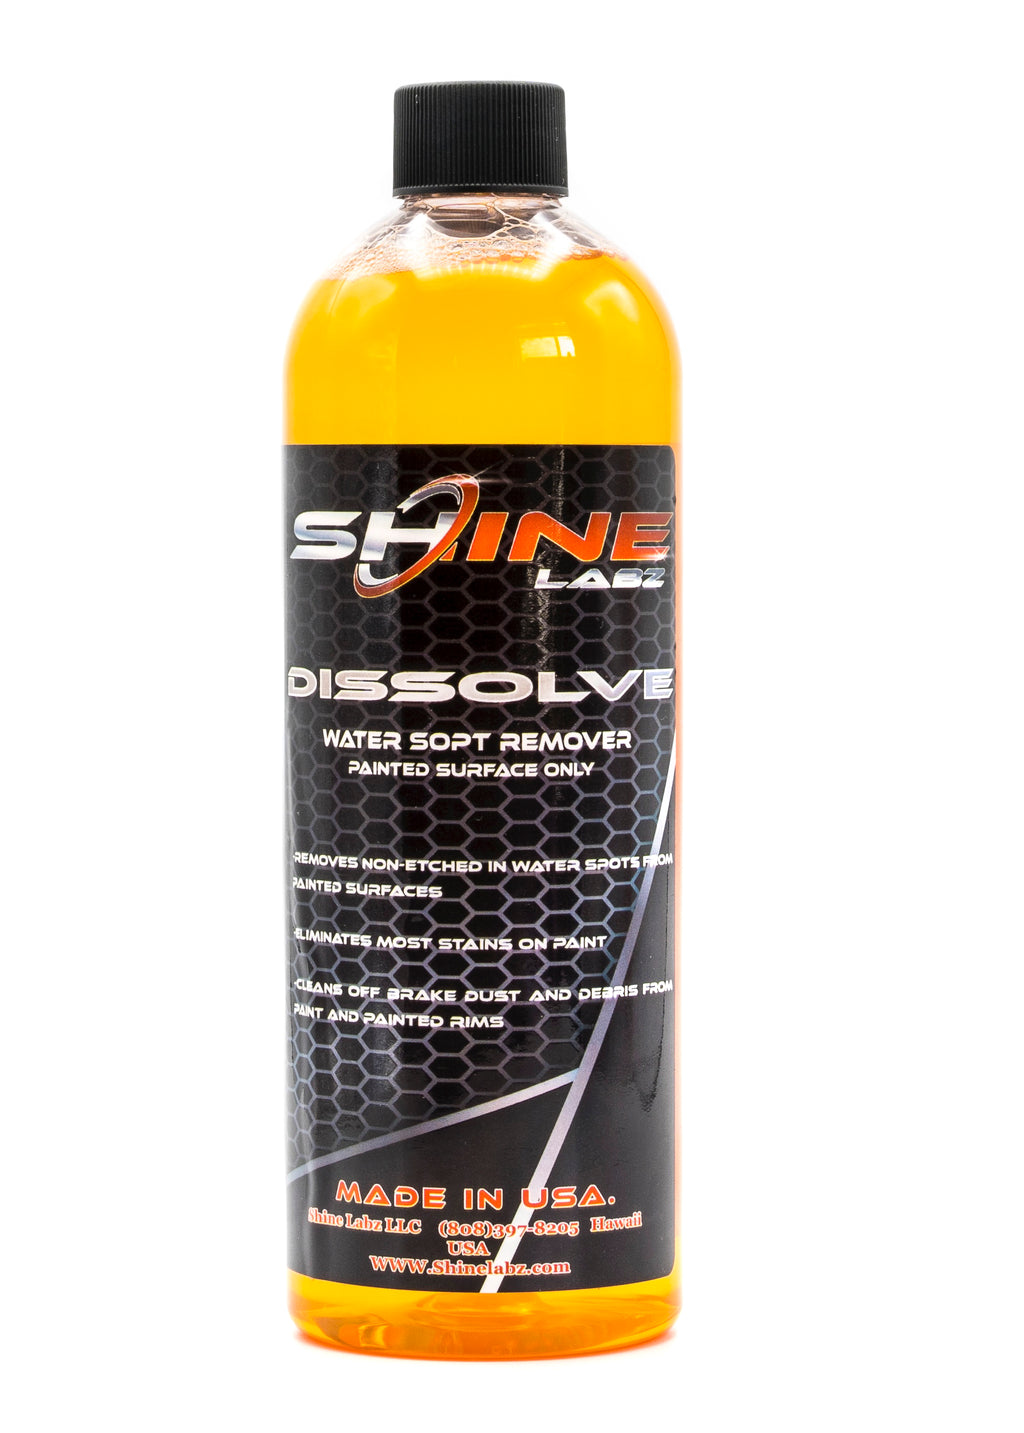 Shine Labz Dissolve - Water Spot Remover